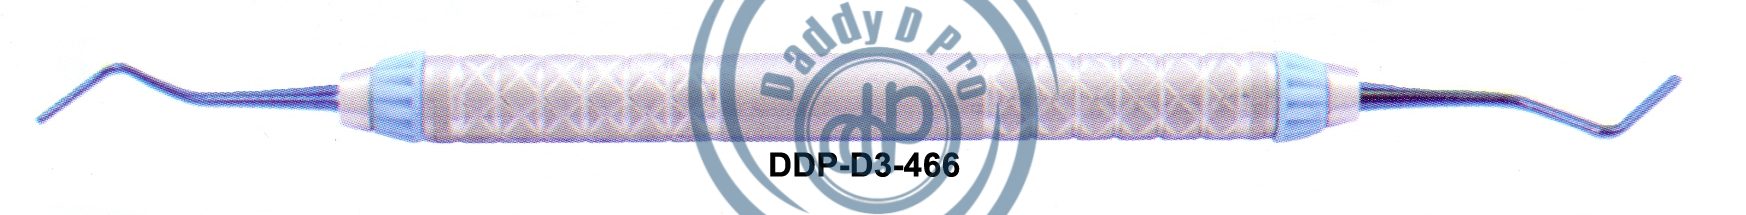 images/DDP-D3-466.png